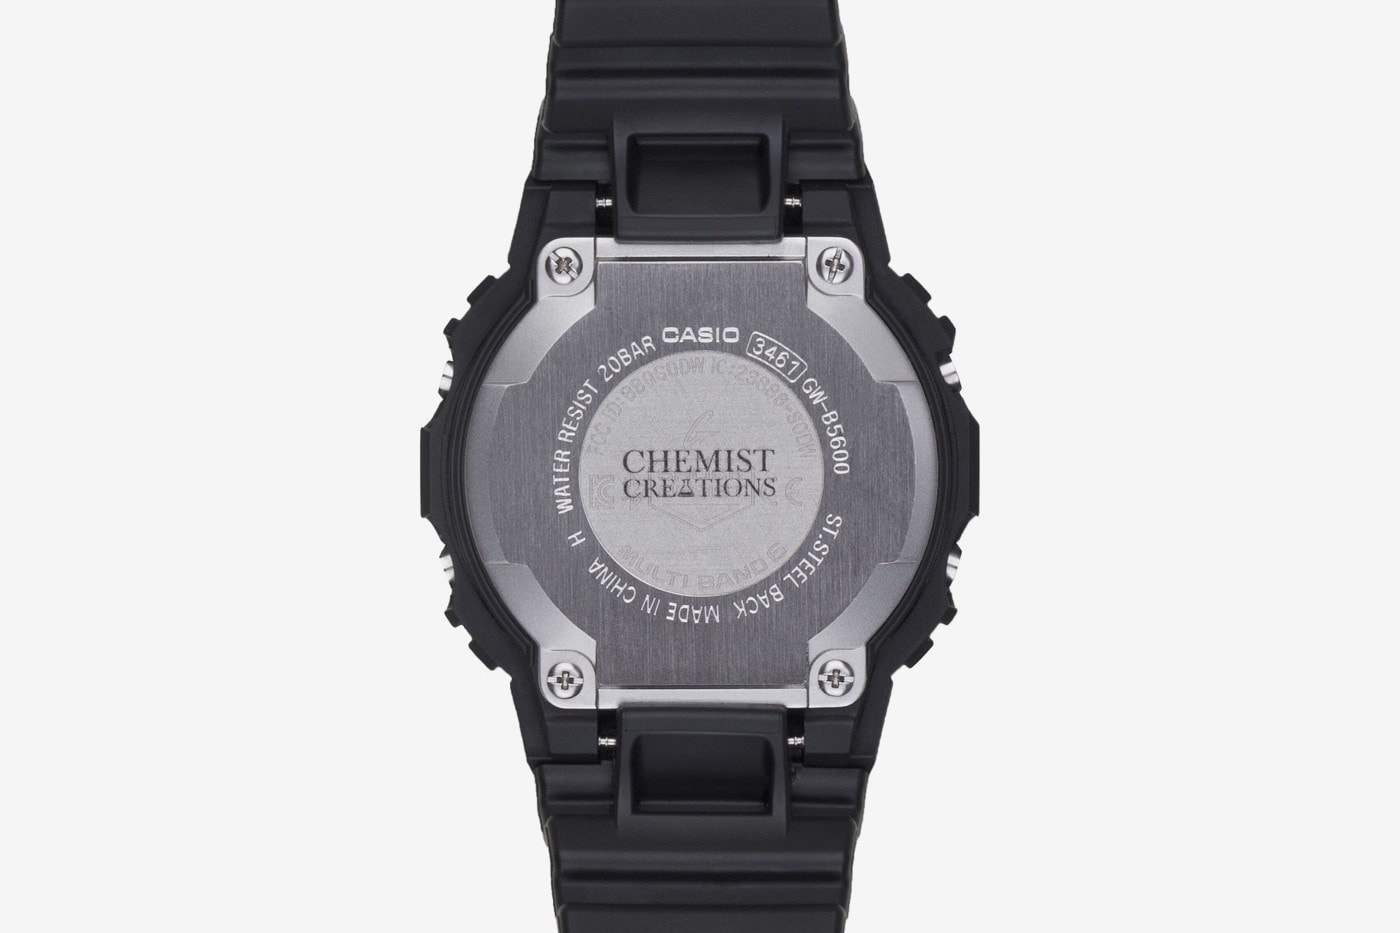 Chemist Creations x G-SHOCK 聯乘 DW-5600 腕錶發佈